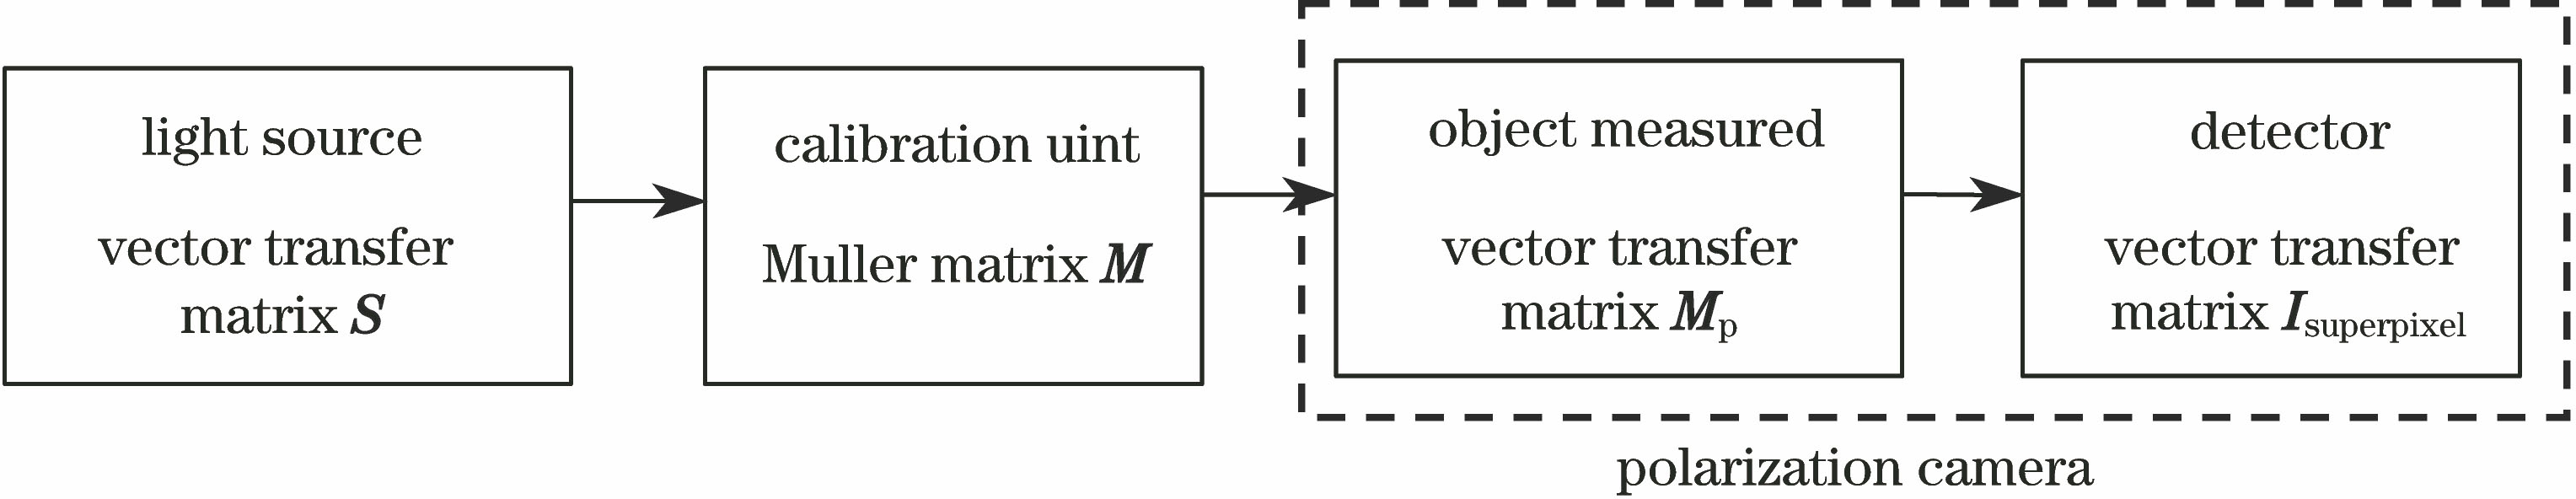 Measurement system of polarization filters vector transfer matrix